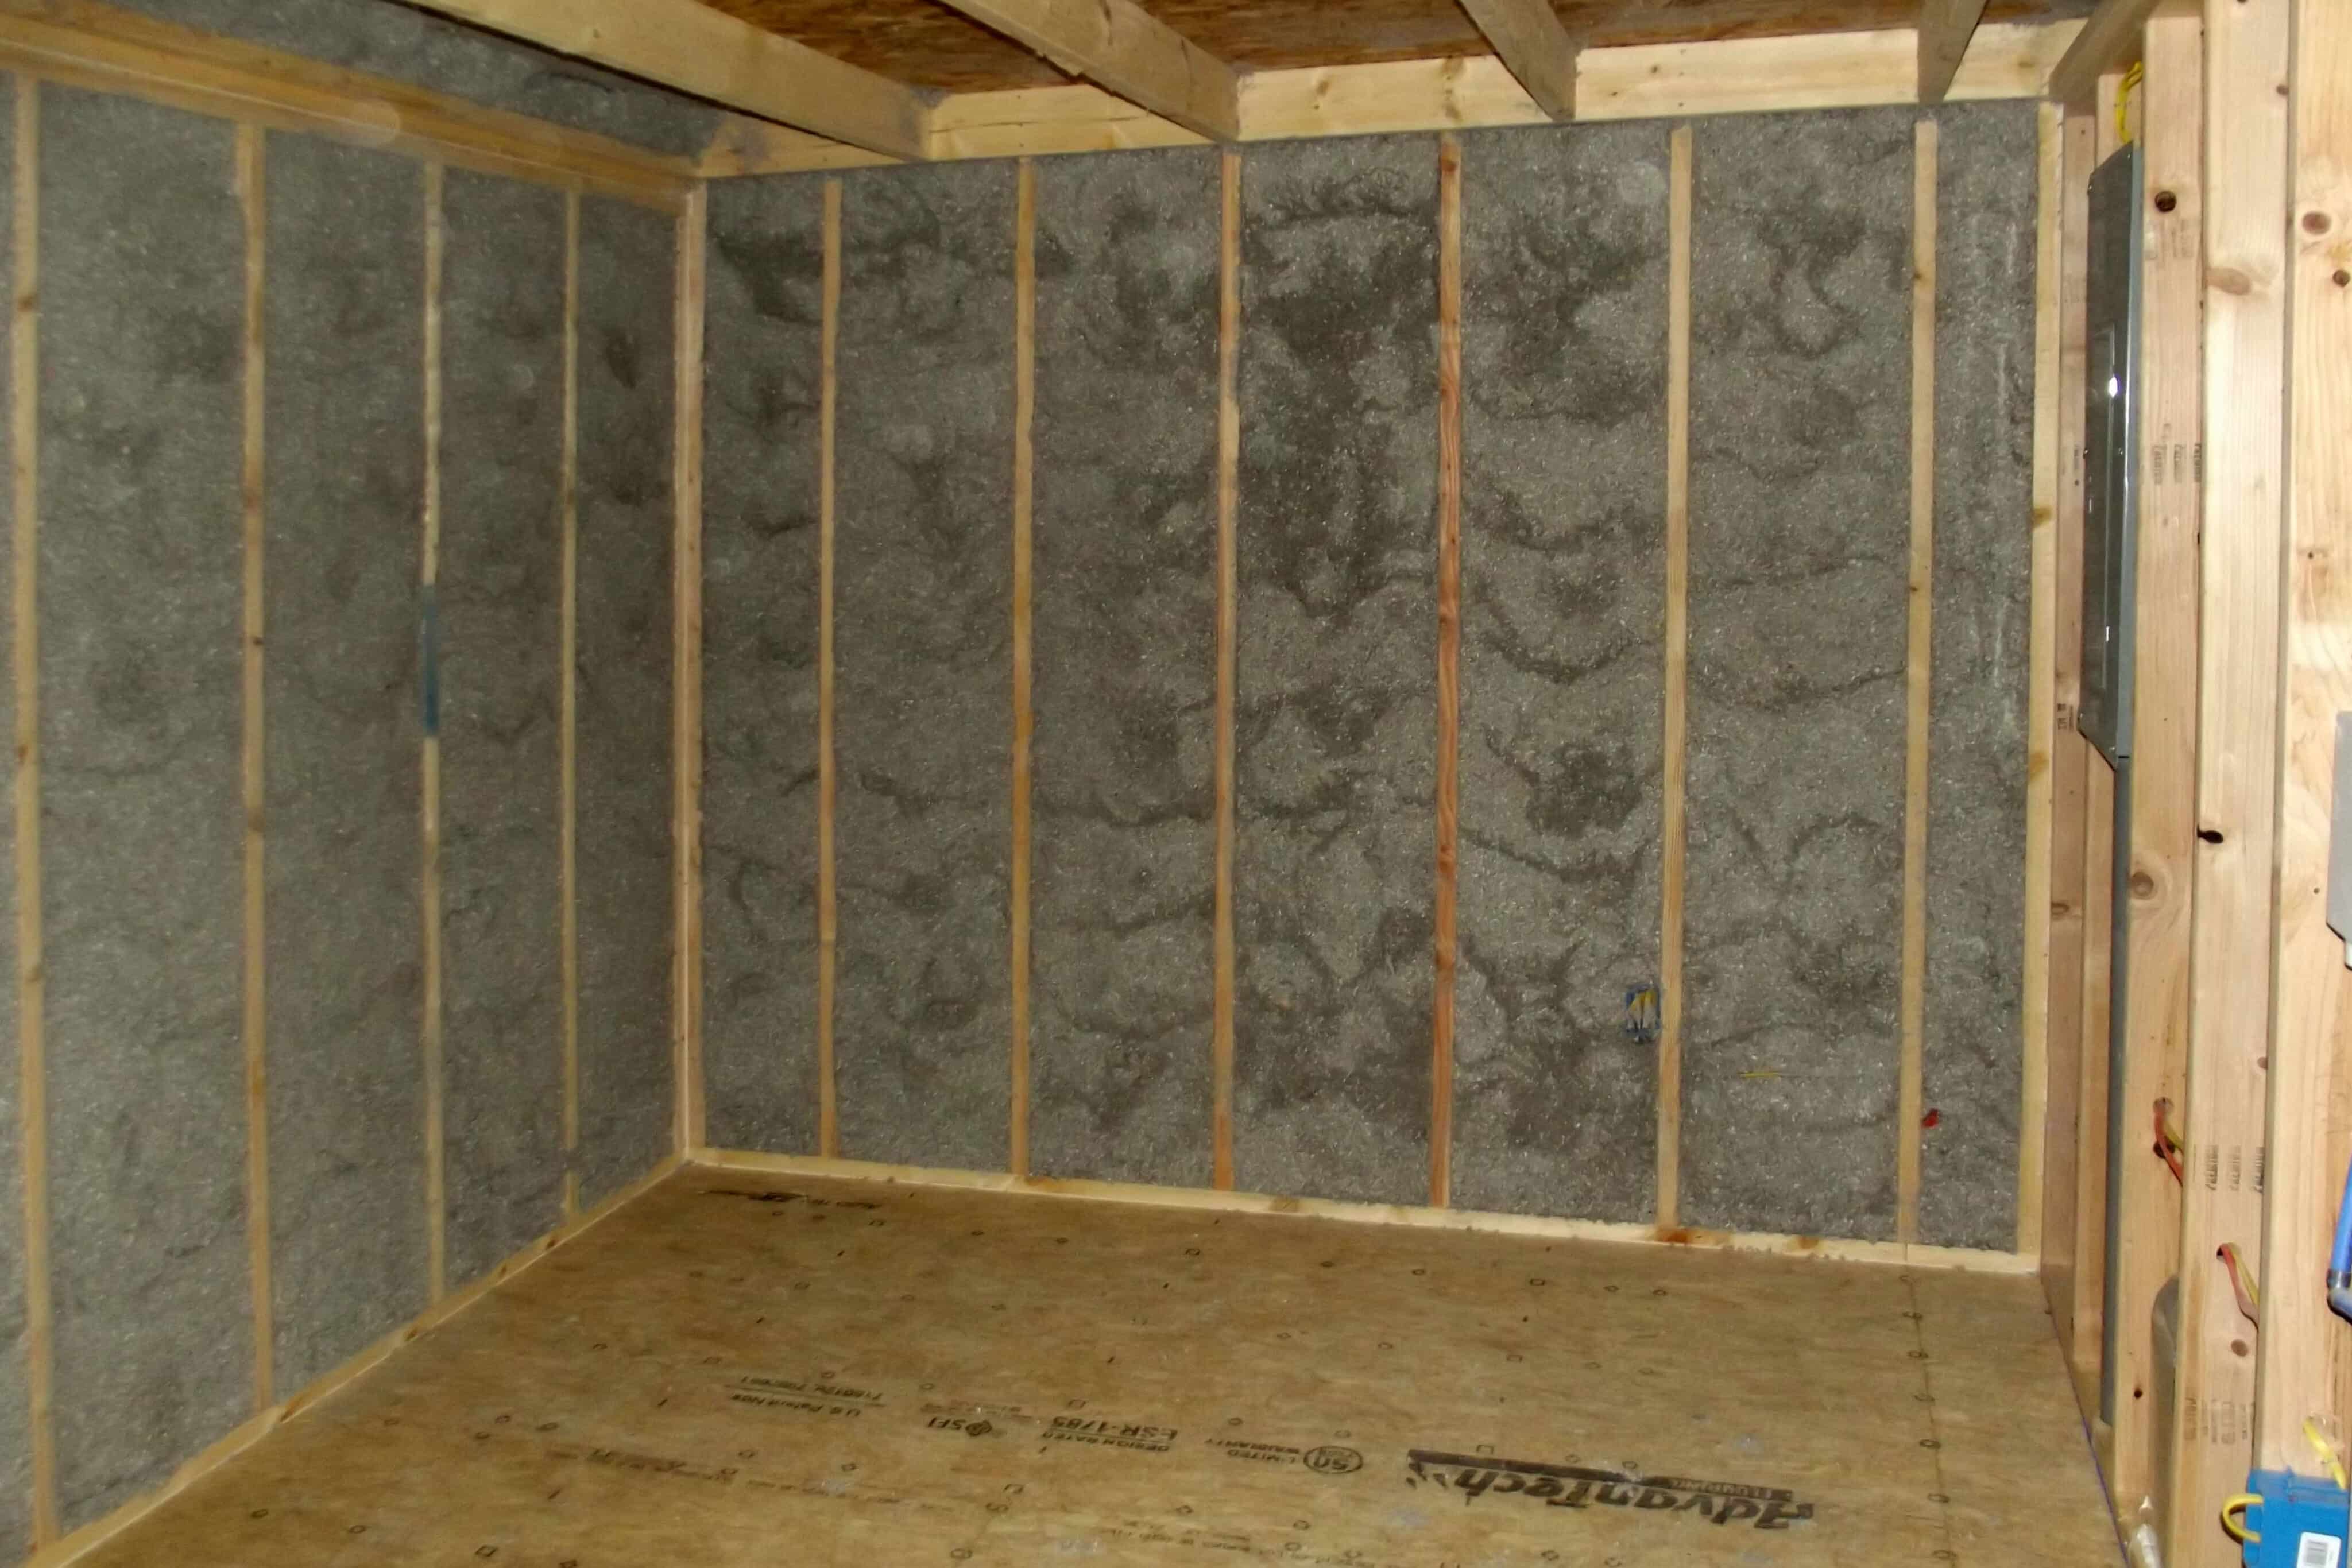 16x40 deluxe cabin interior walls insulated